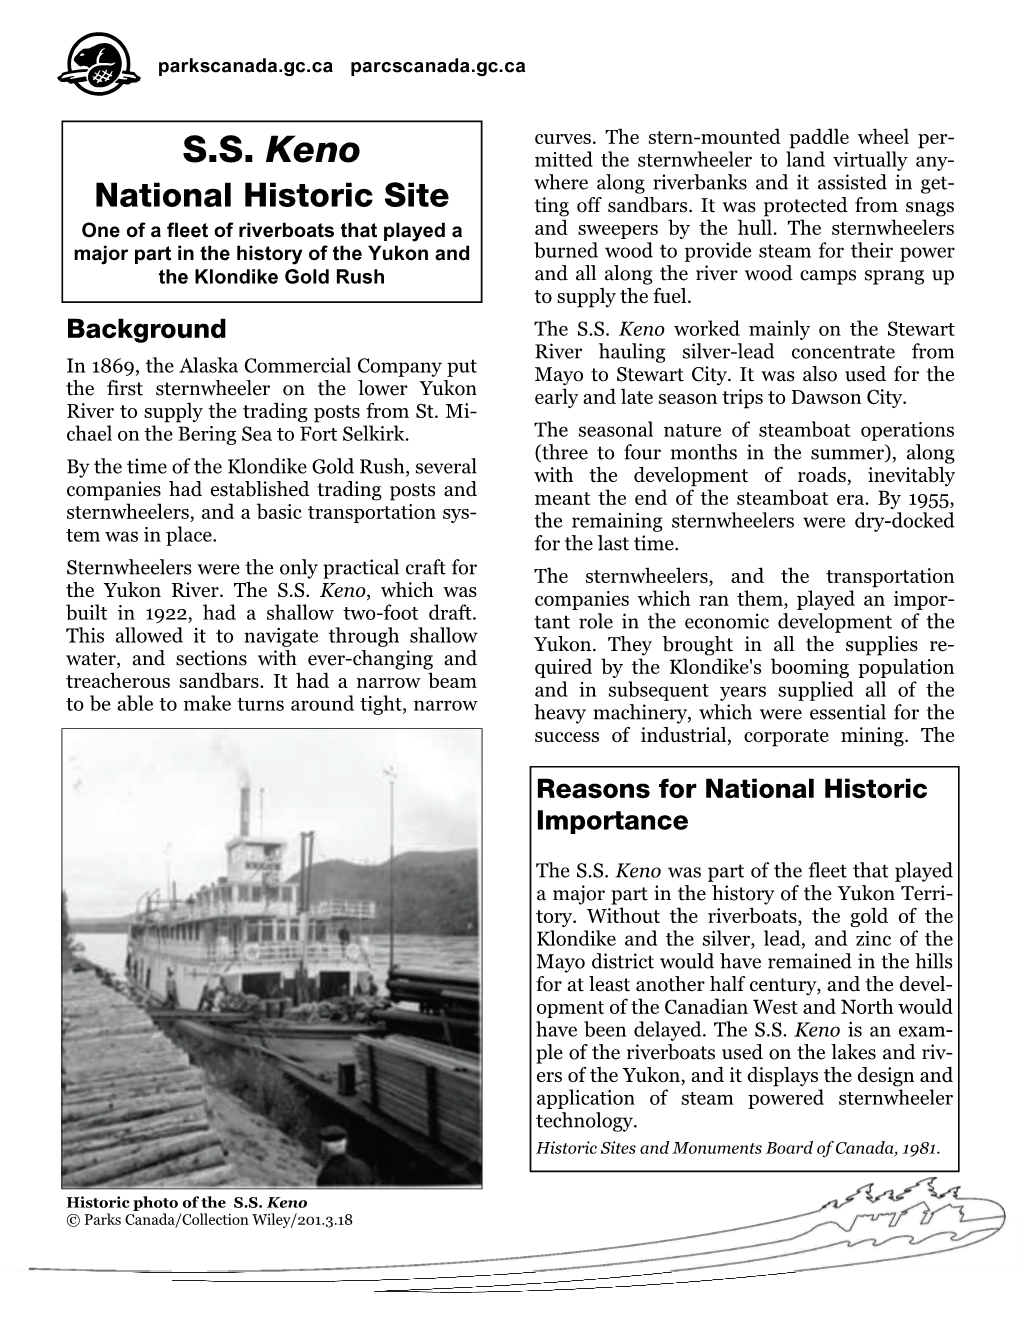 SS Keno National Historic Site Fact Sheet